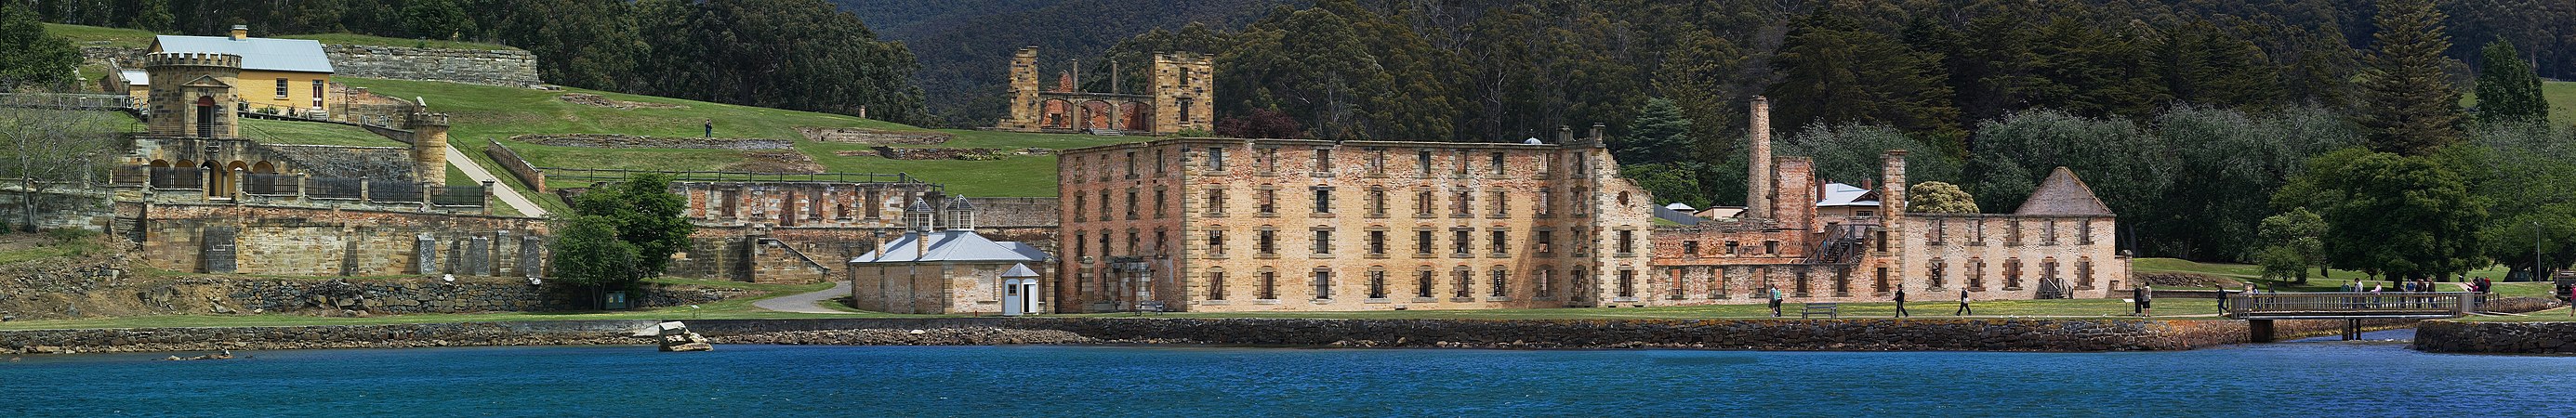 Port Arthur, Tasmania, by JJ Harrison